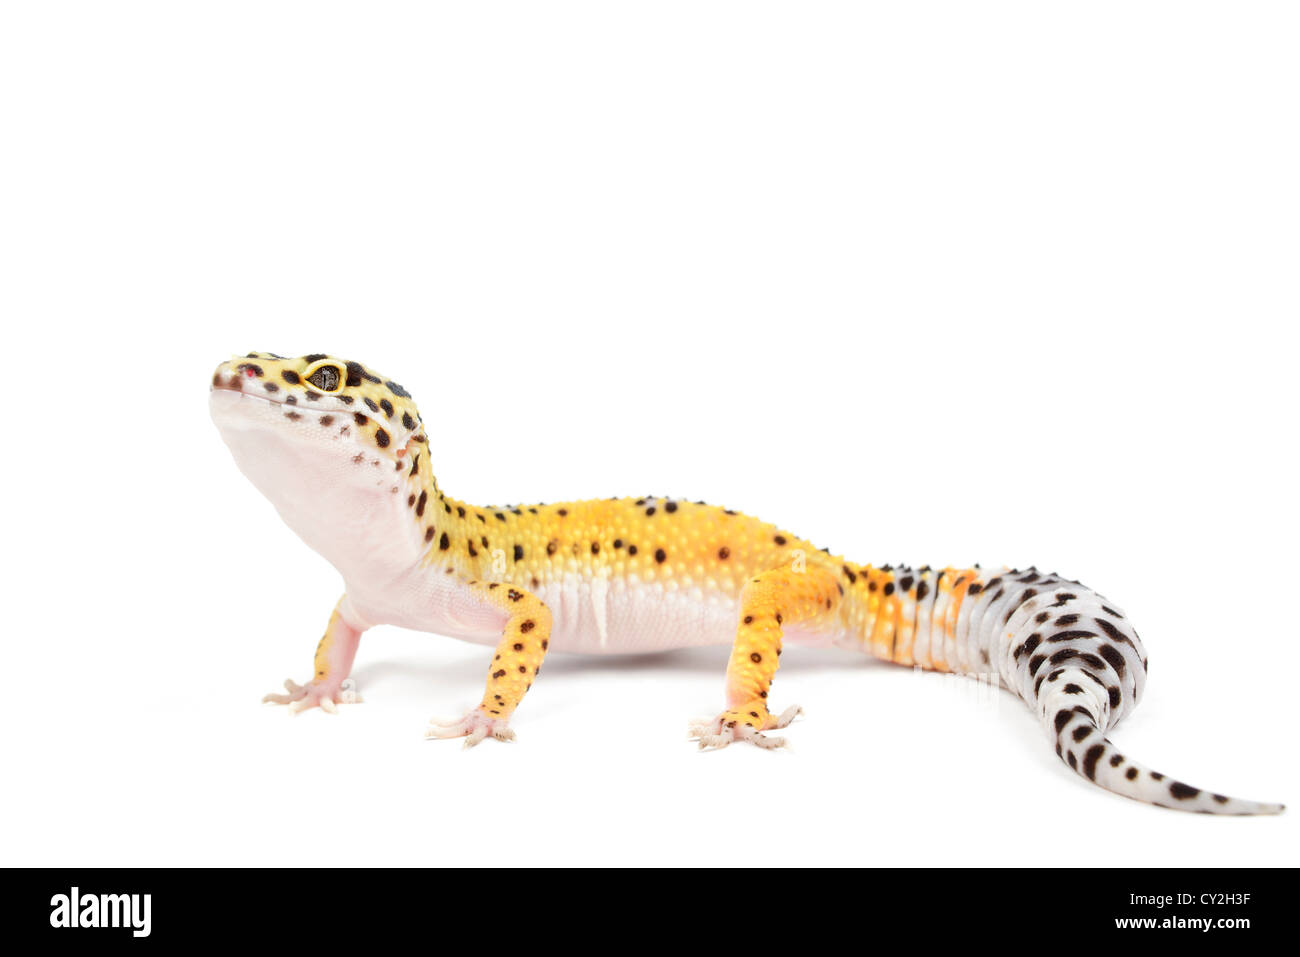 Leopard gecko on white background. Stock Photo